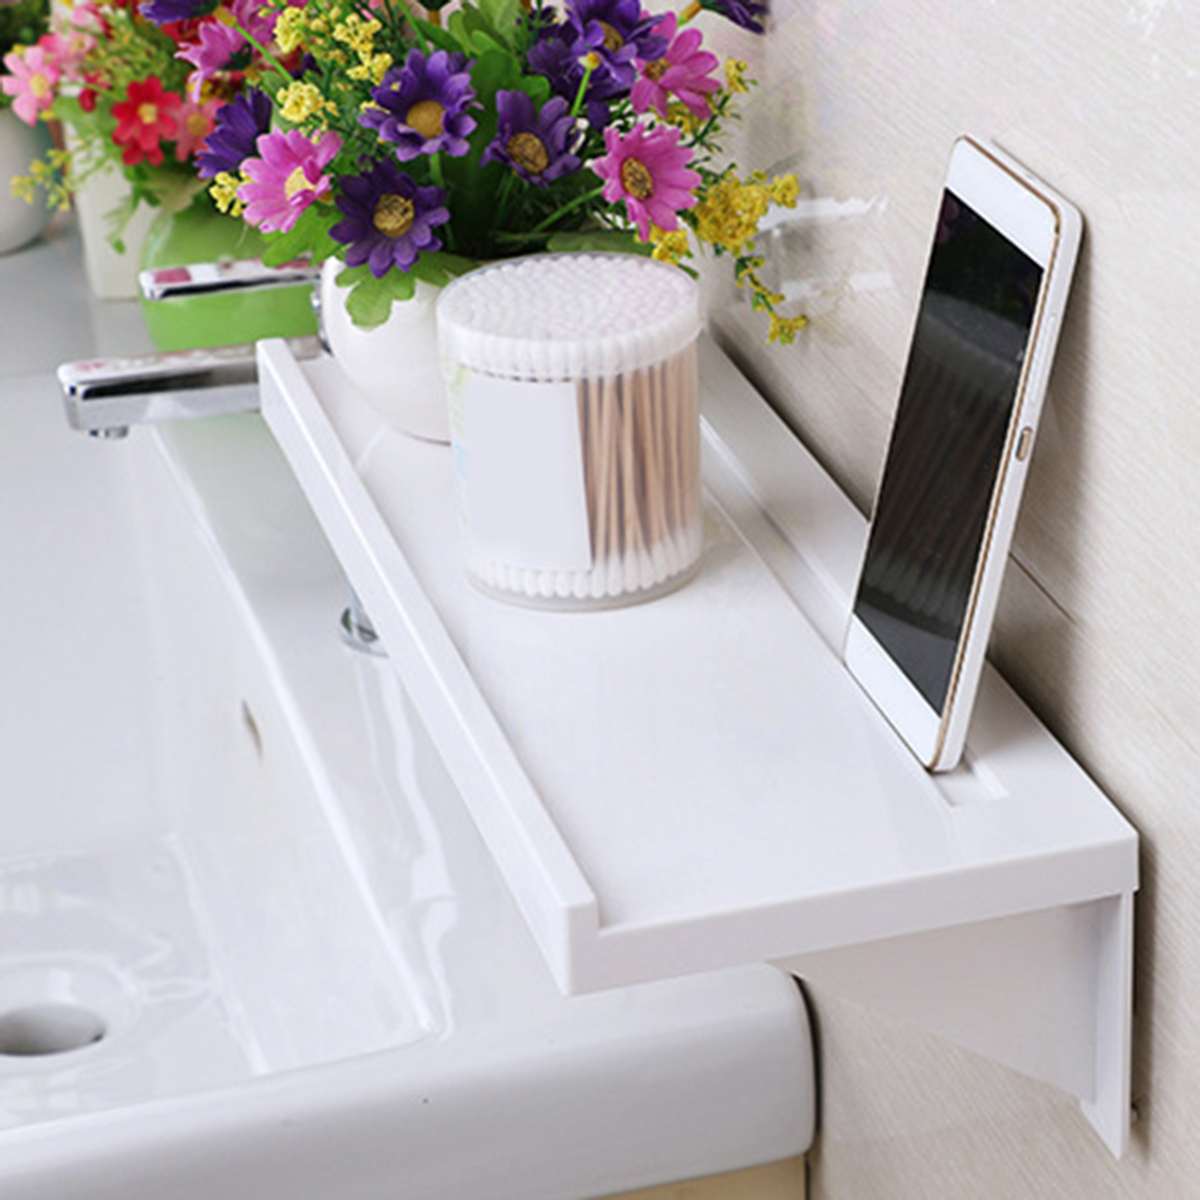 https://www.joopzy.com/wp-content/uploads/2019/12/Single-Tier-Suction-Cup-Bathroom-Shelf-Wall-Rack-Plastic-Shower-Caddy-Organizer-Holder-Tray-Kitchen-Lotion-1.jpg